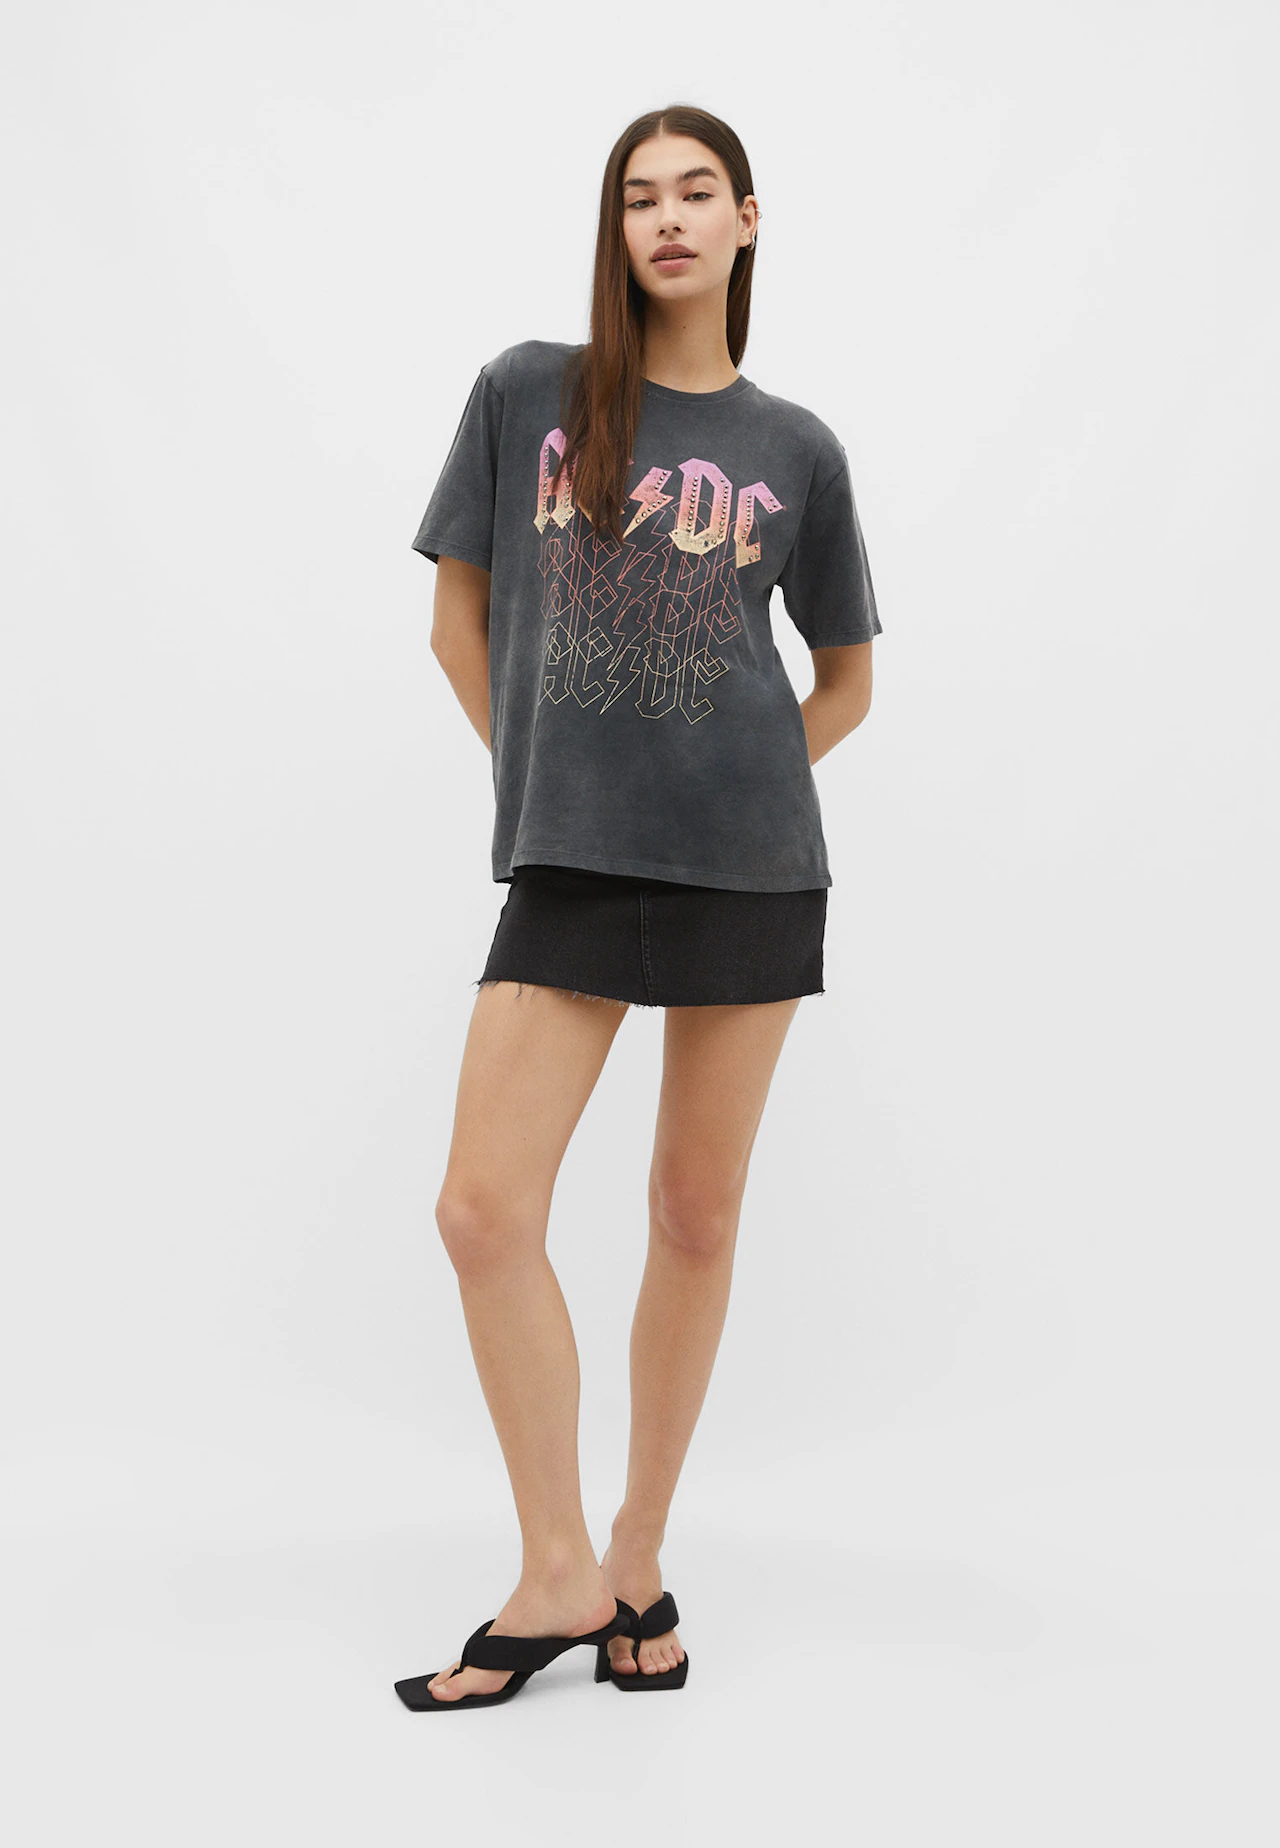 AC/DC T-shirt - United fashion Women\'s States Stradivarius 